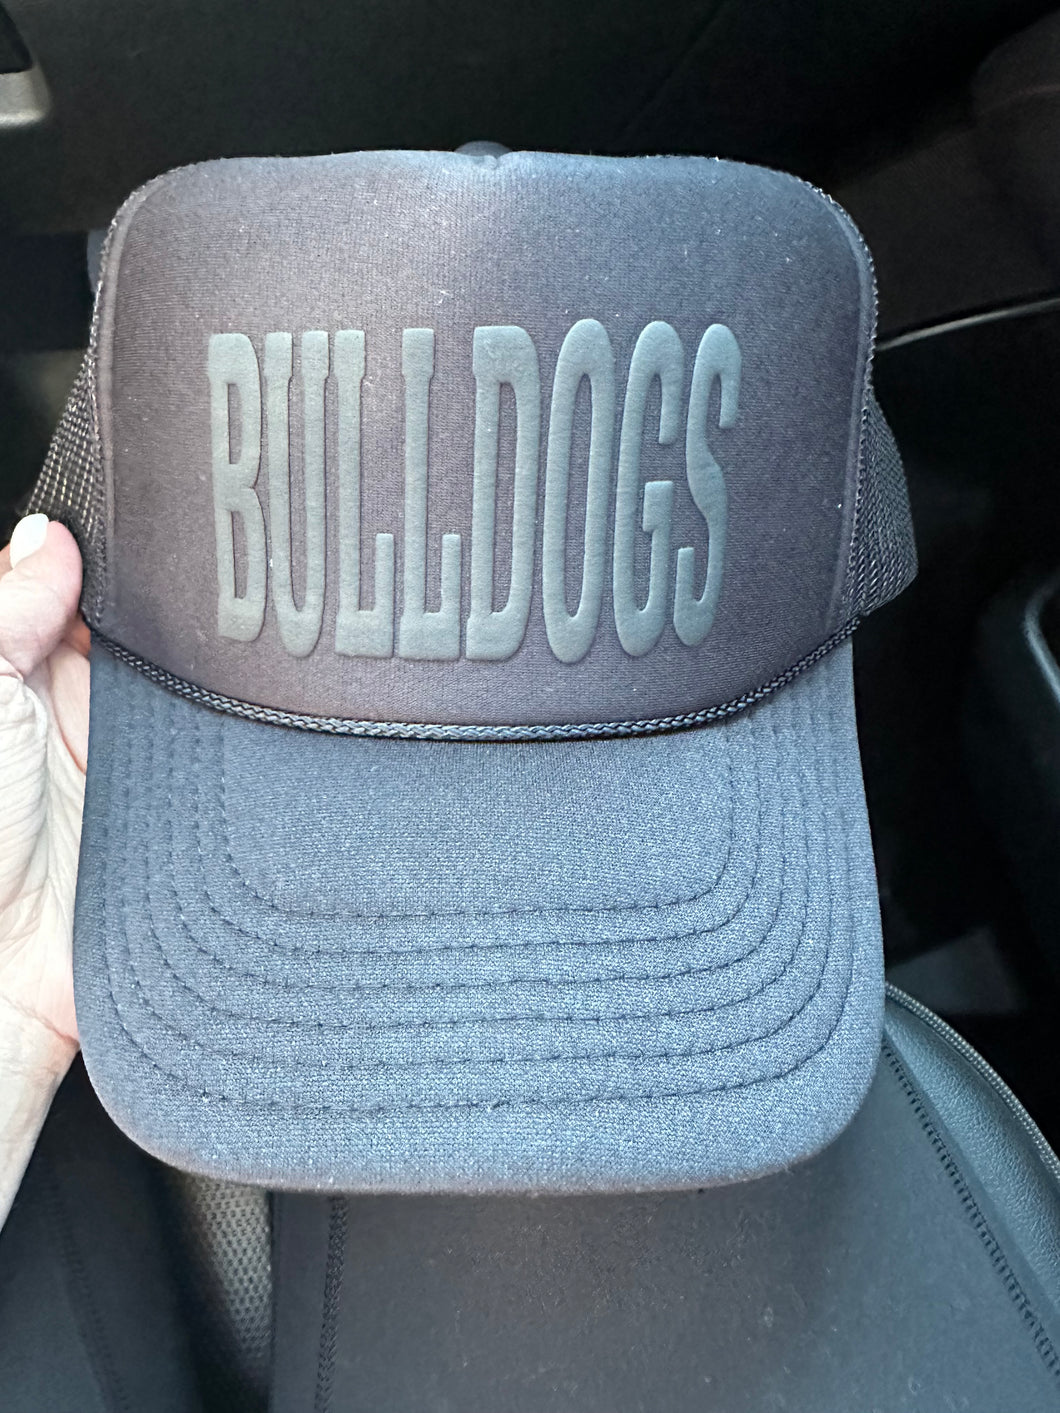 Bulldogs Black Puff Trucker Cap